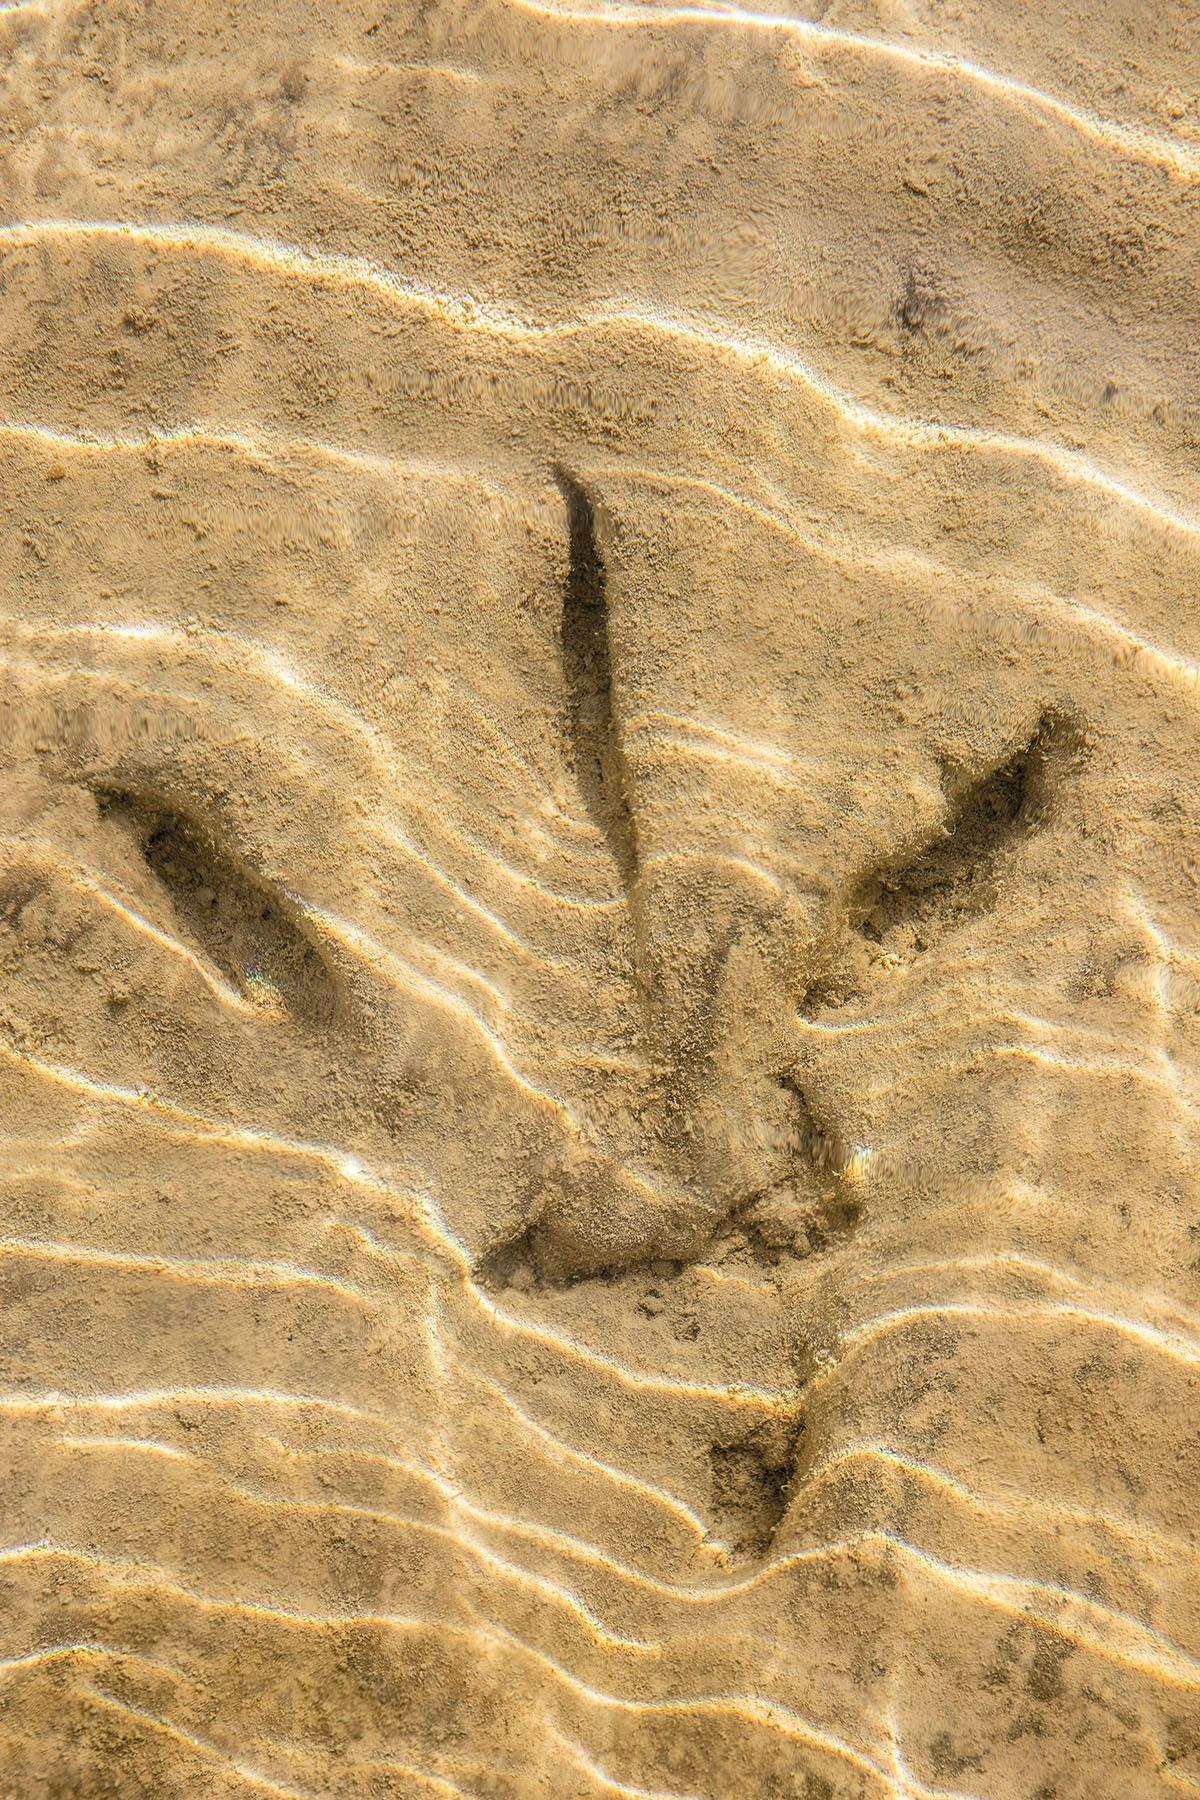 A spiny dinosaur footprint inside golden sand under water